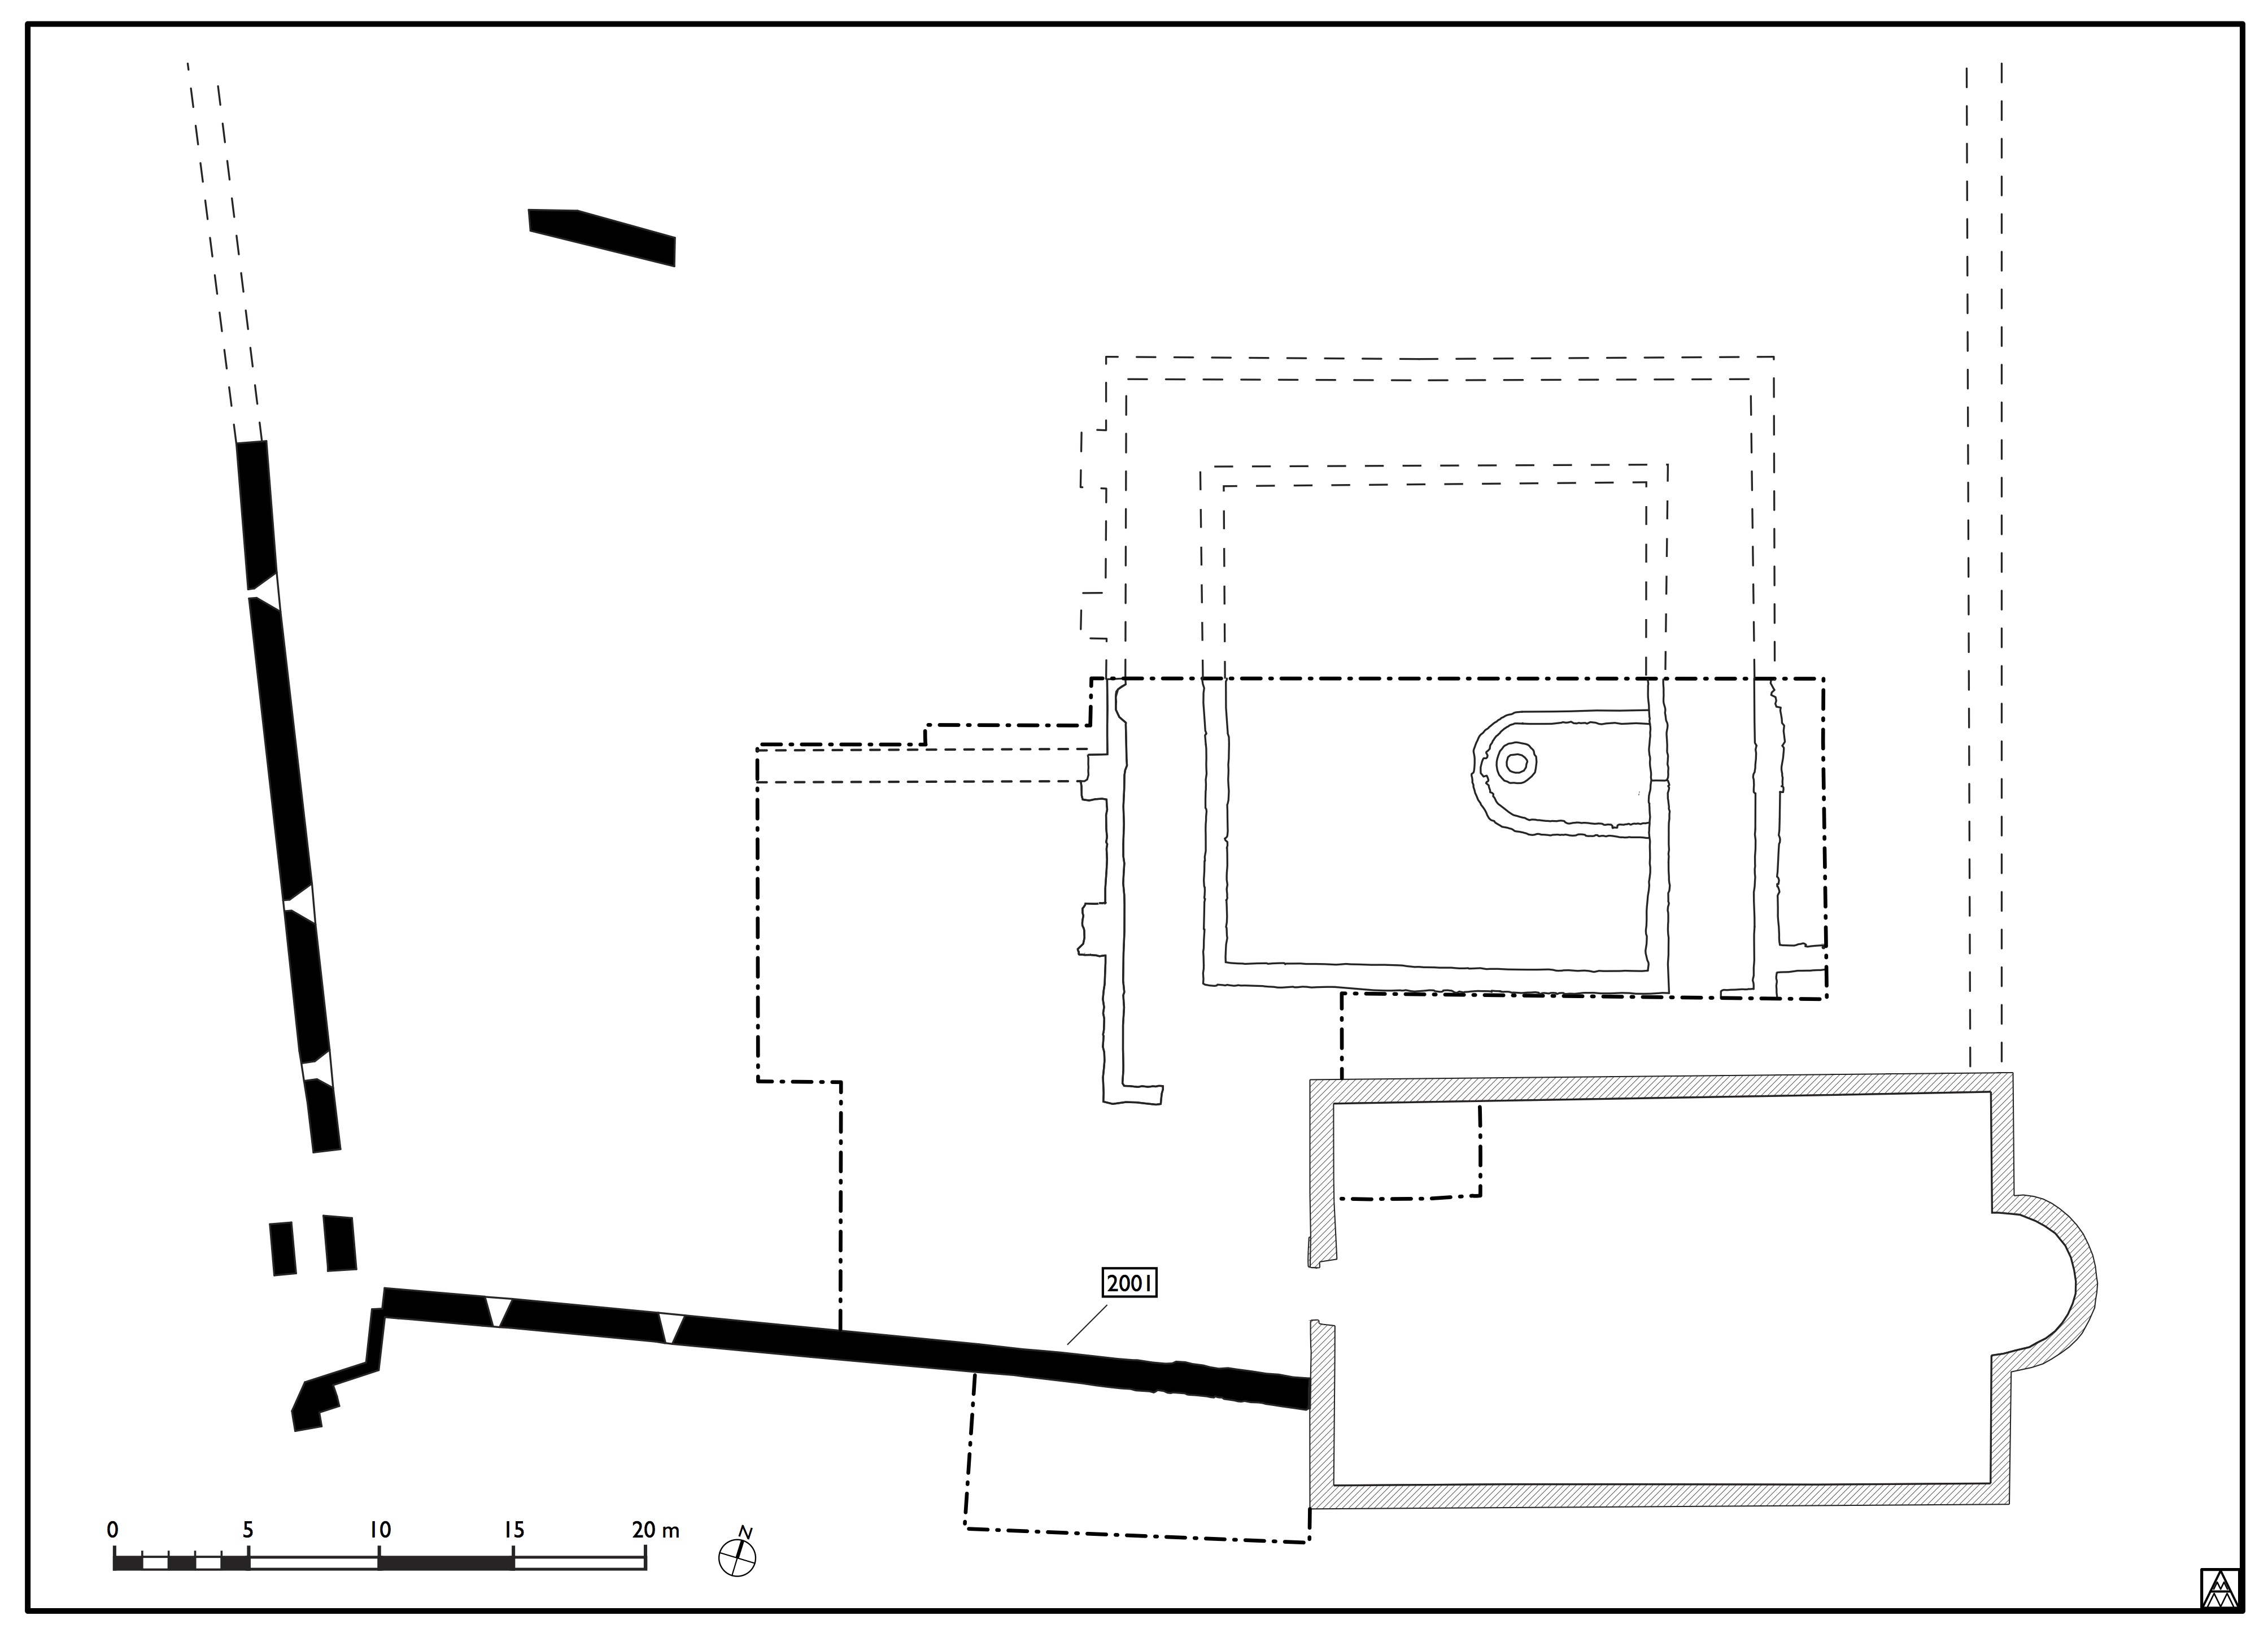 Figure 64. Plan of the castrum (Margaret Andrews).